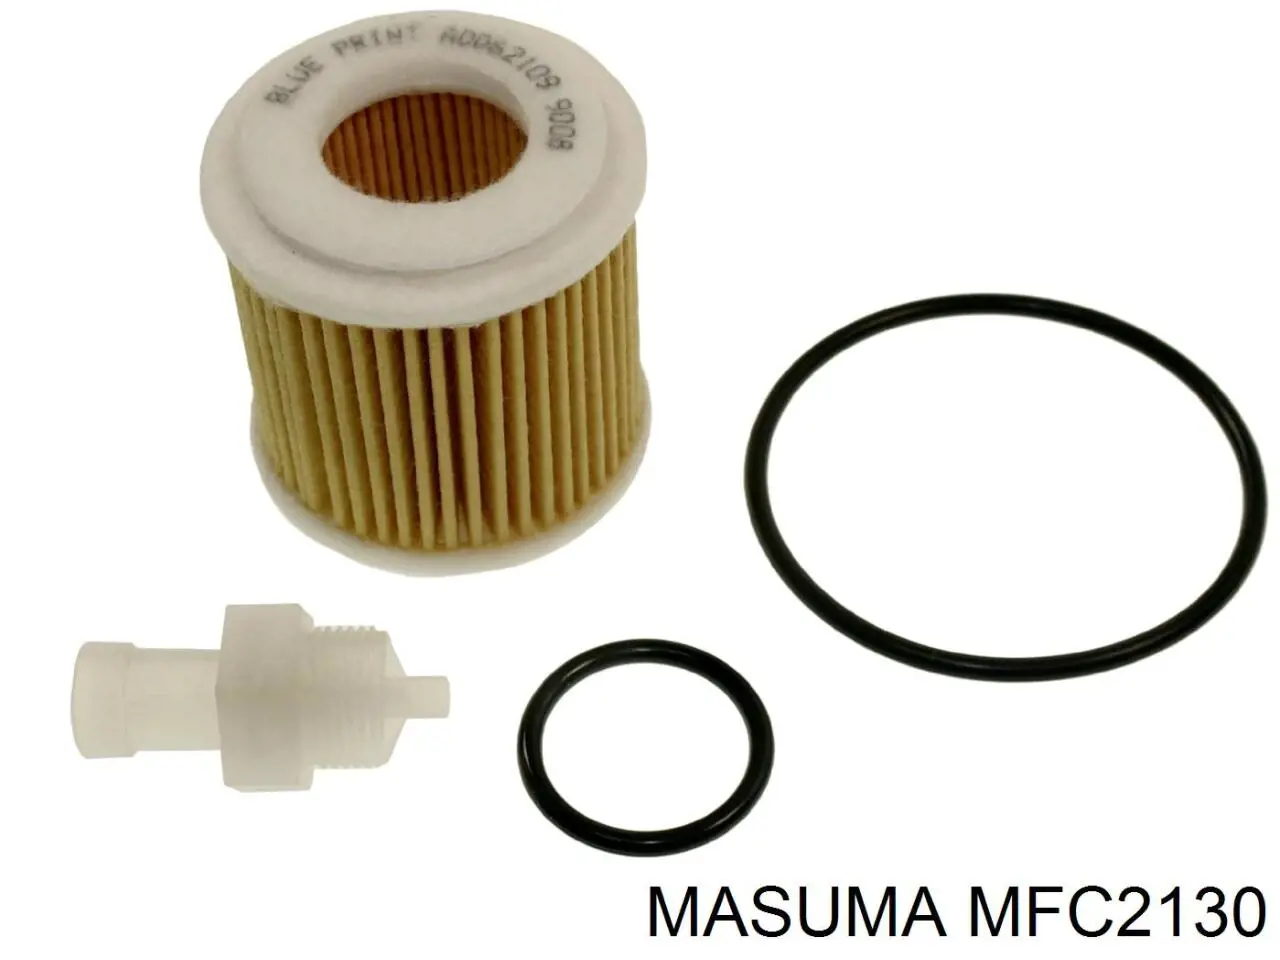 MFC2130 Masuma filtro de aceite